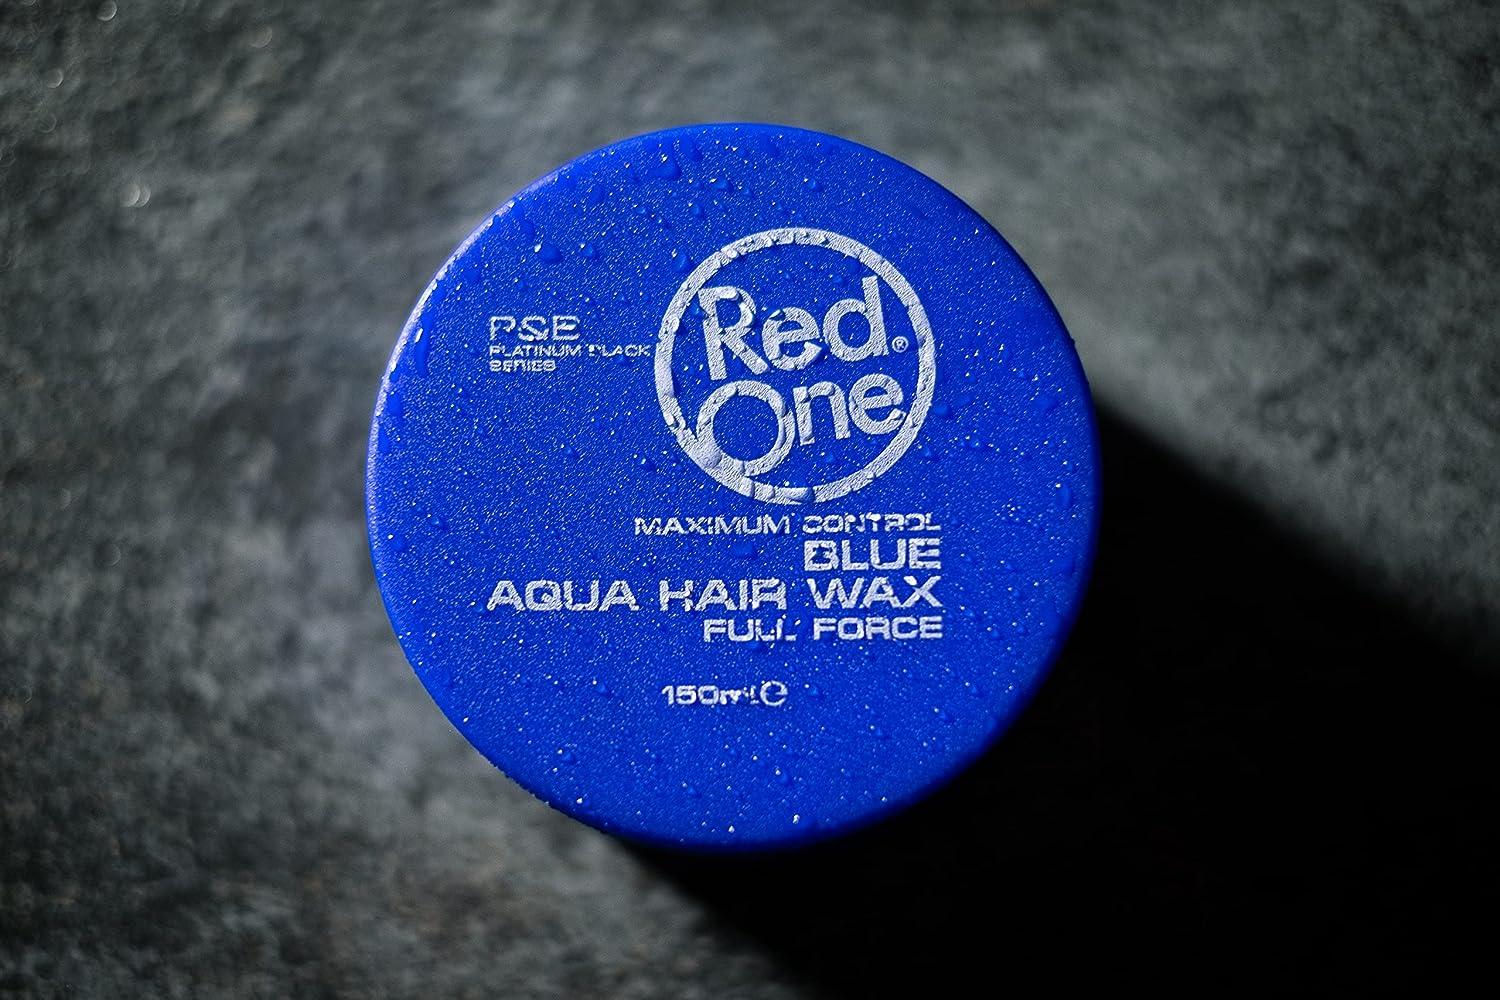 Red One Black Aqua Hair Gel Wax 150ml